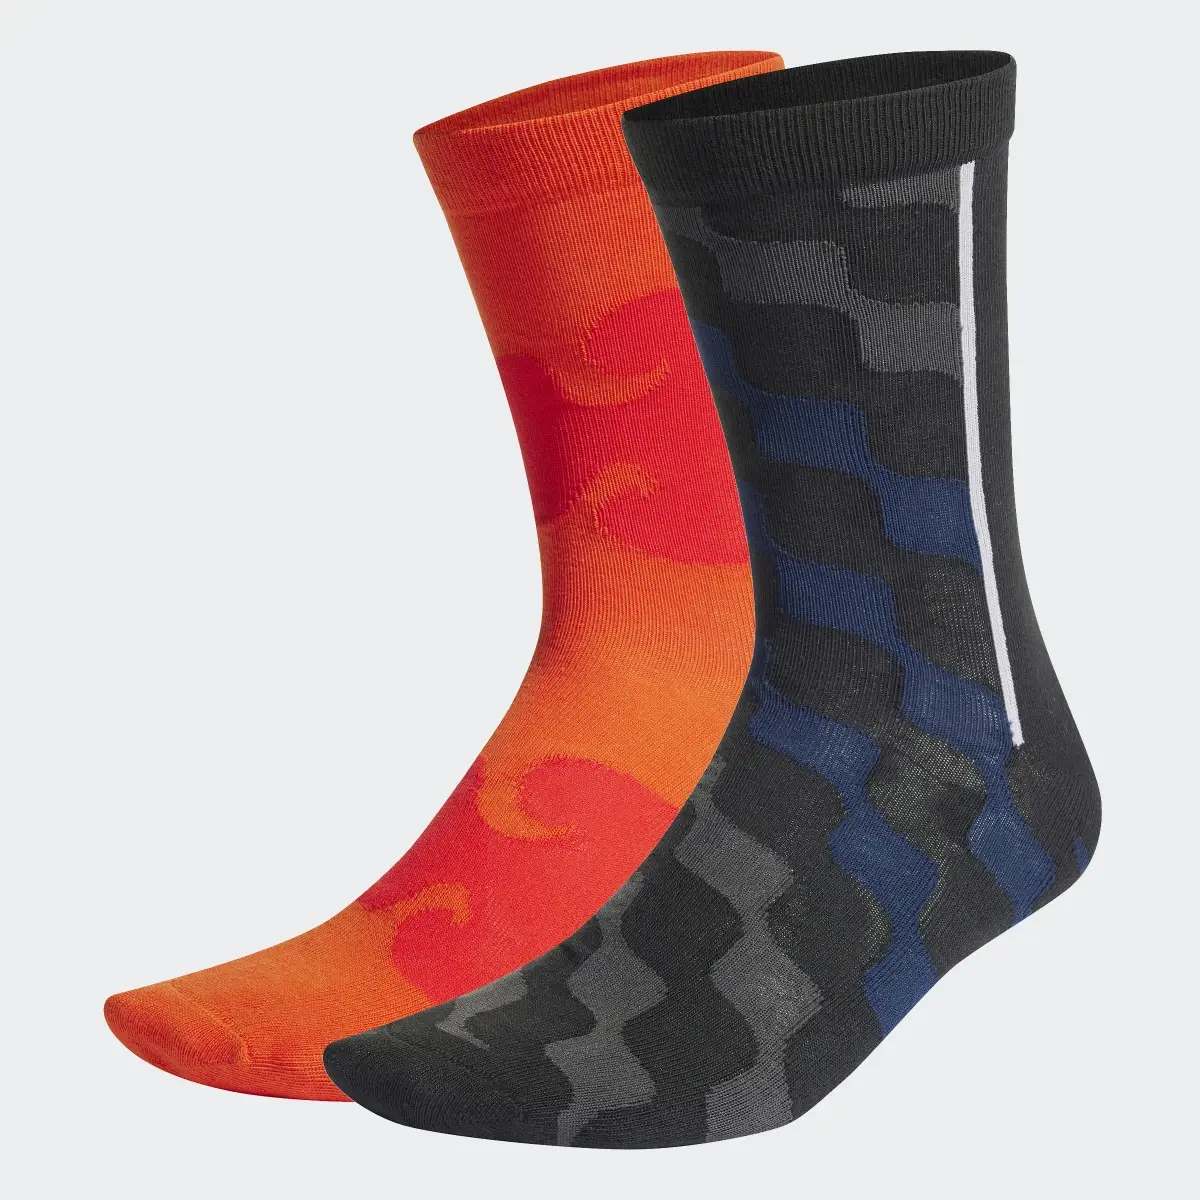 Adidas Marimekko Socken, 2 Paar. 2